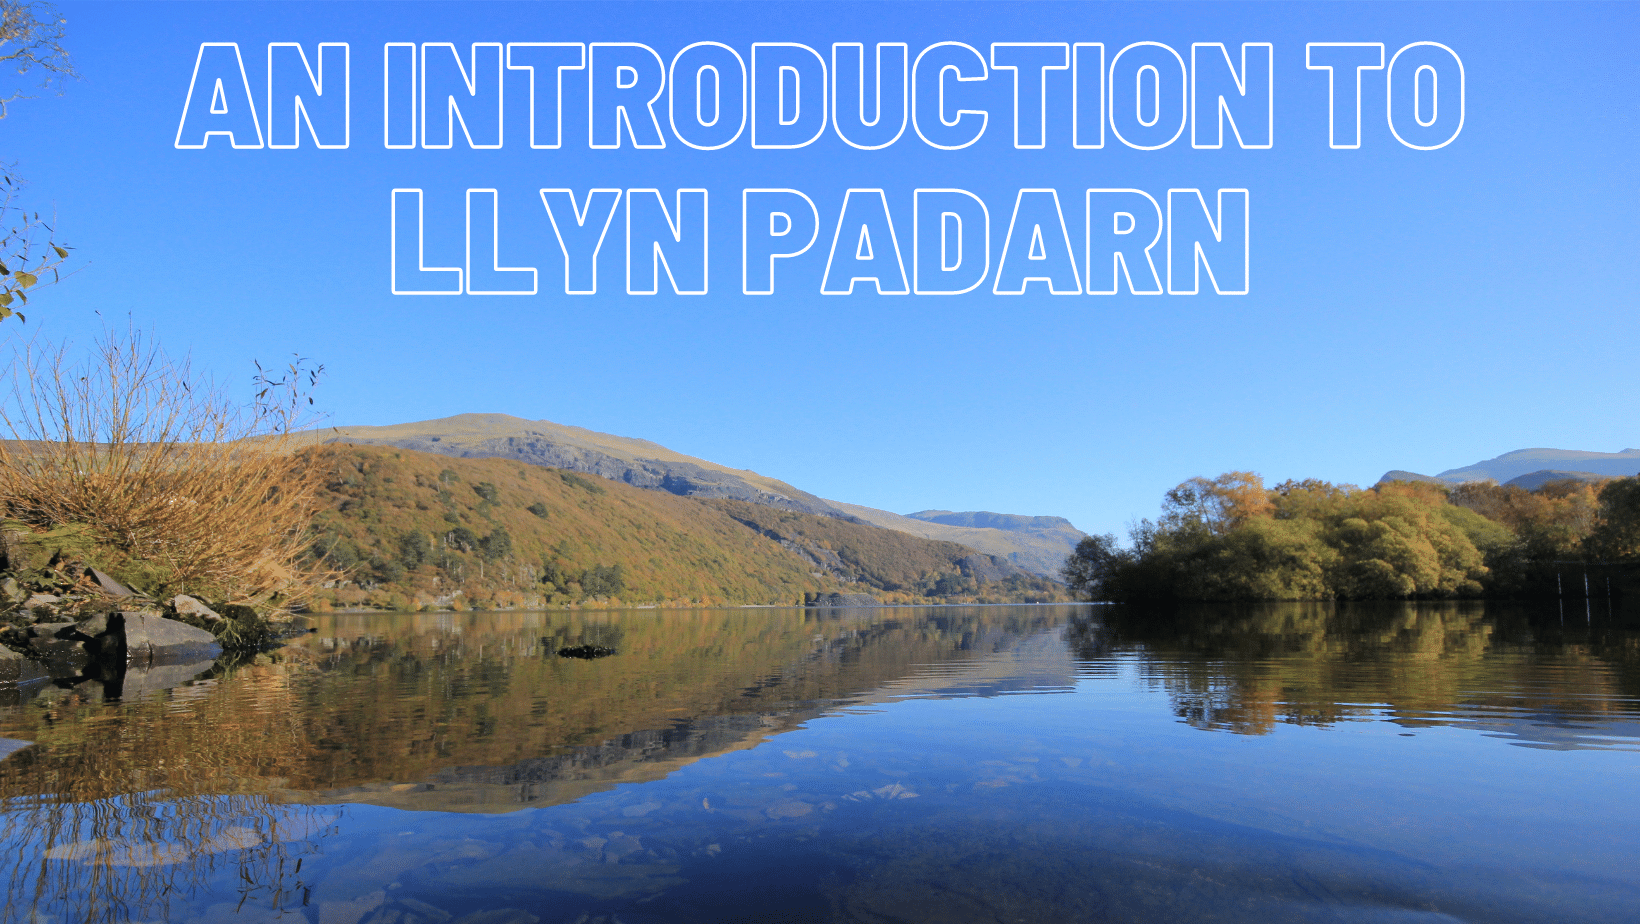 Llyn Padarn - general information about the lake we enjoy.